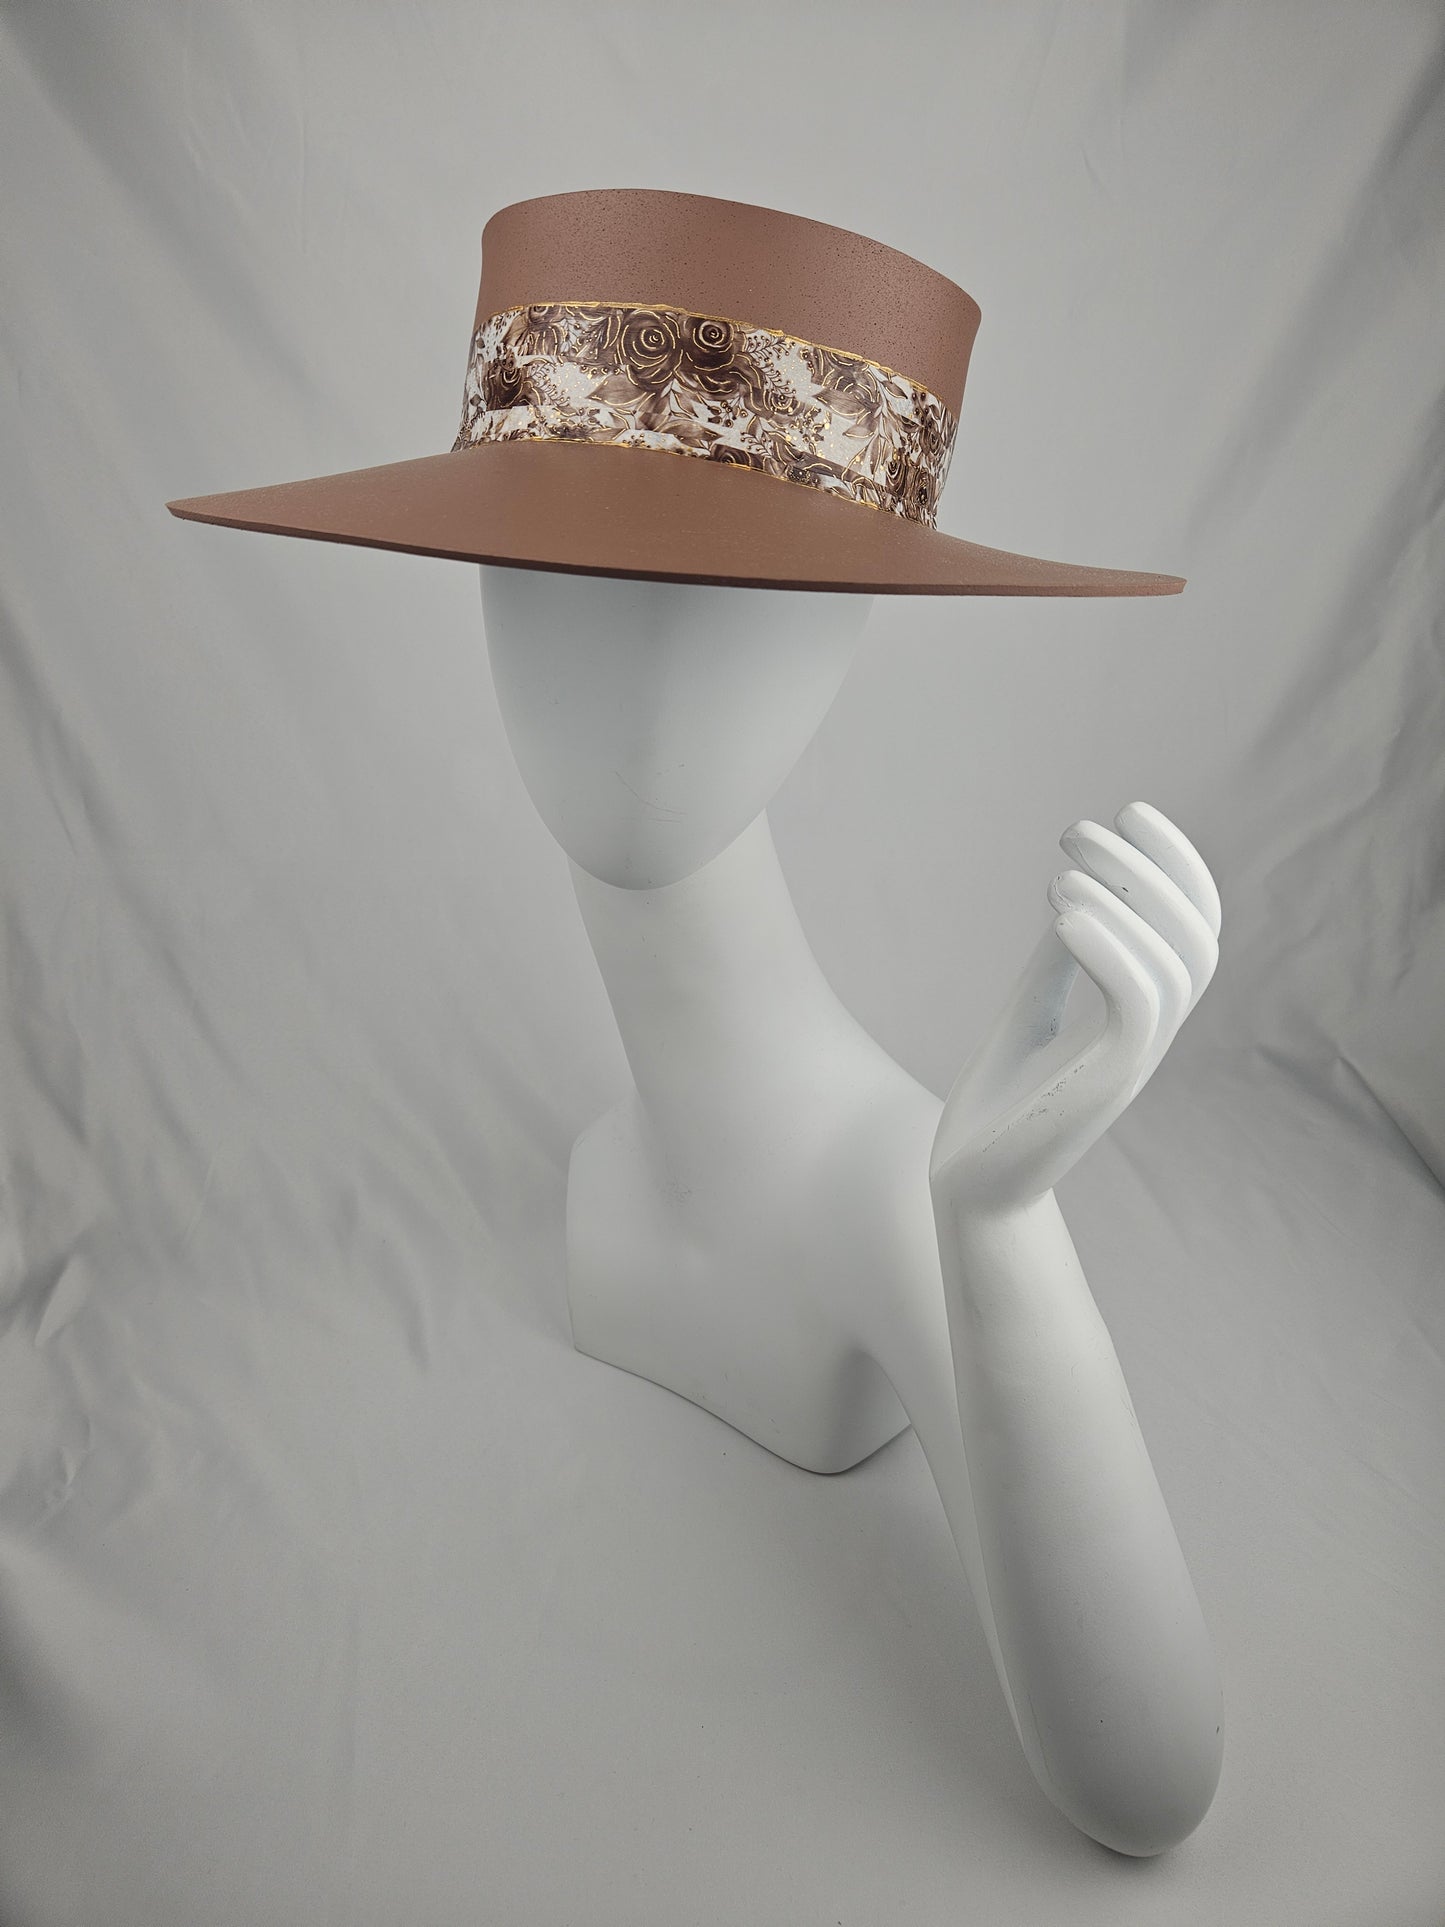 Tall Rich Brown Audrey Foam Sun Visor Hat with Beautiful Floral Band: 1950s, Walks, Brunch, Tea, Golf, Wedding, Church, No Headache, Easter, Pool, Beach